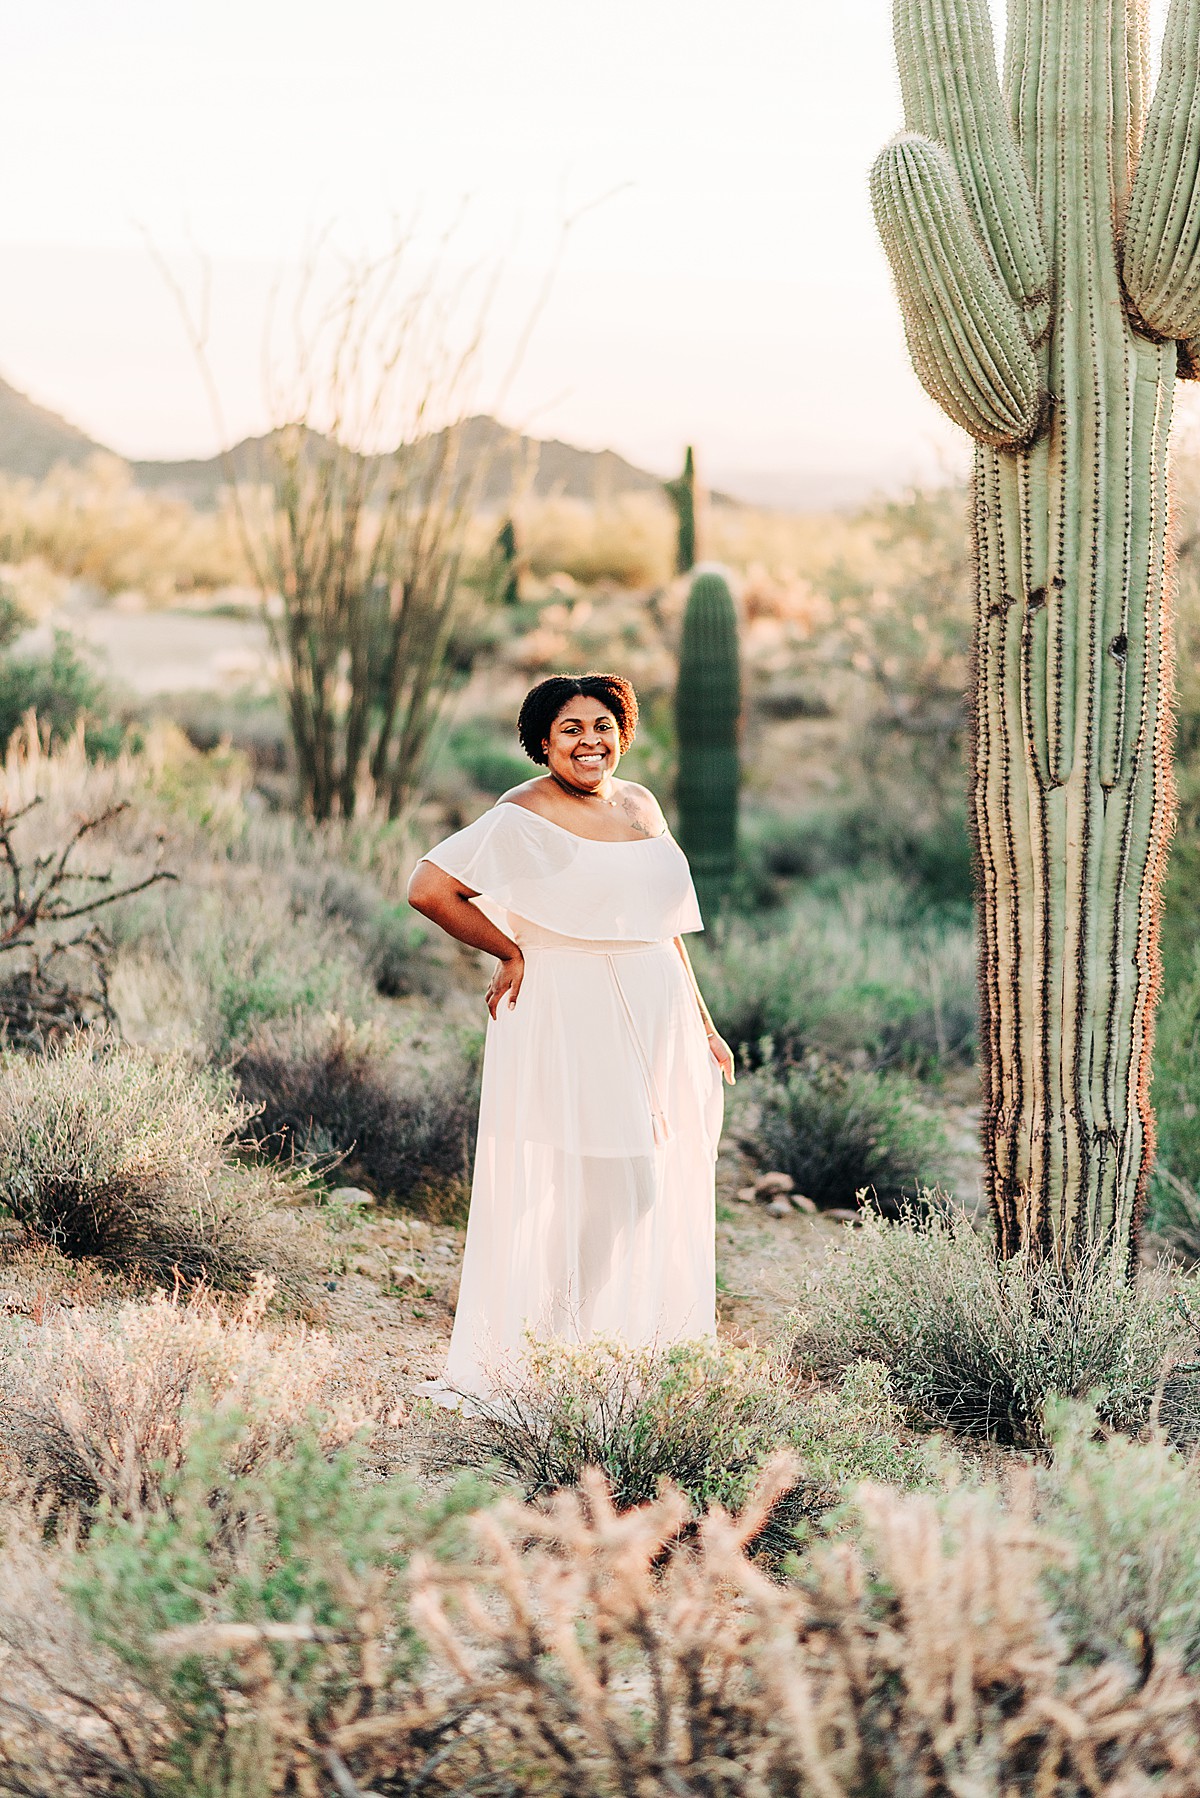 arizona family photographer Jasmyn Coleman in blush pink dress by saguaro cactus